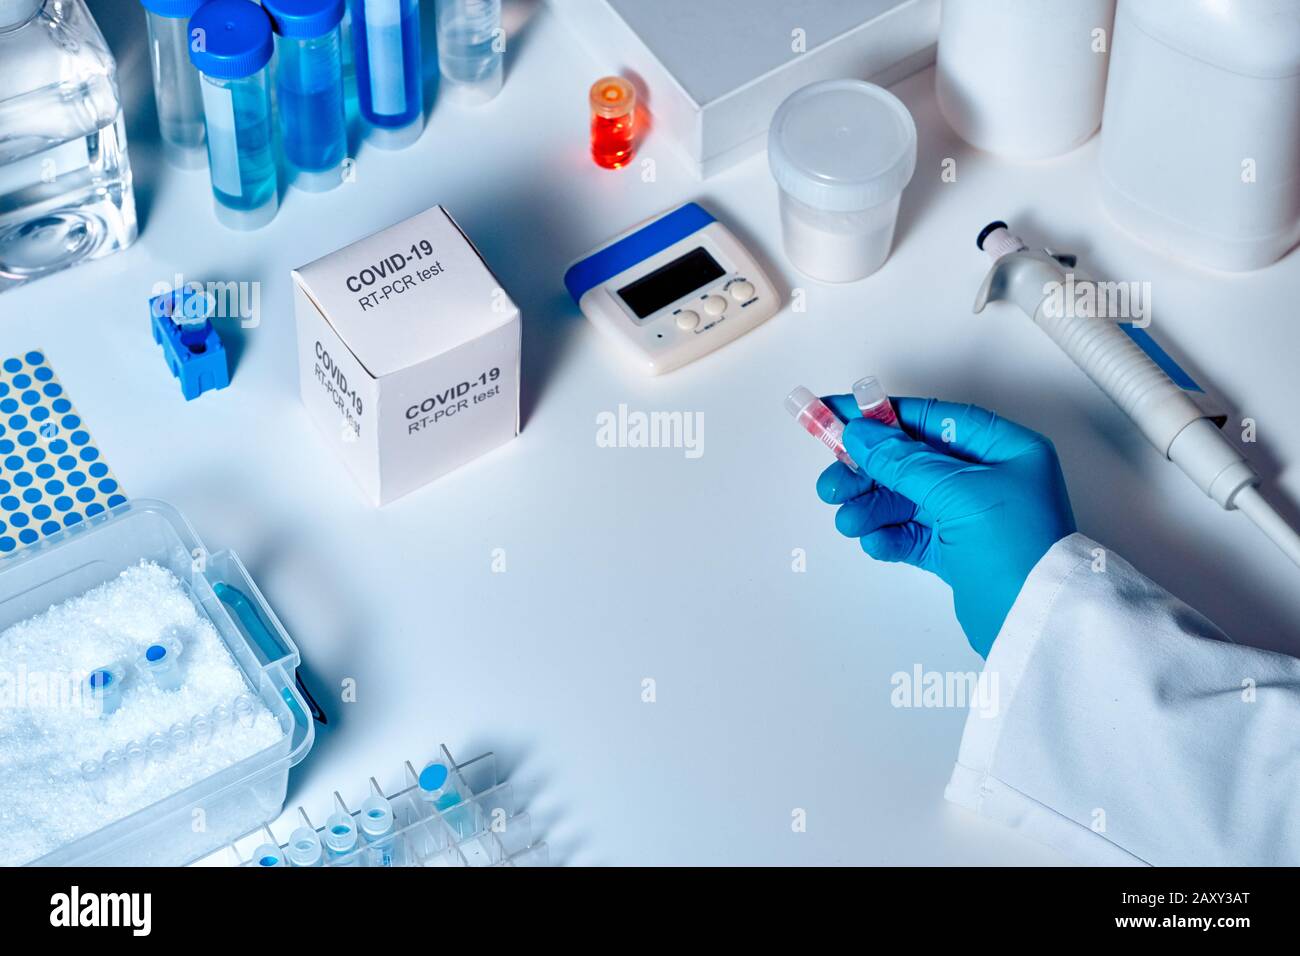 Kit de diagnóstico para pcr novel coronavirus 2019 nCoV. Se trata de un kit RT-PCR para detectar la presencia de virus 2019-nCoV o covid19 en muestras clínicas. Diám. In vitro Foto de stock